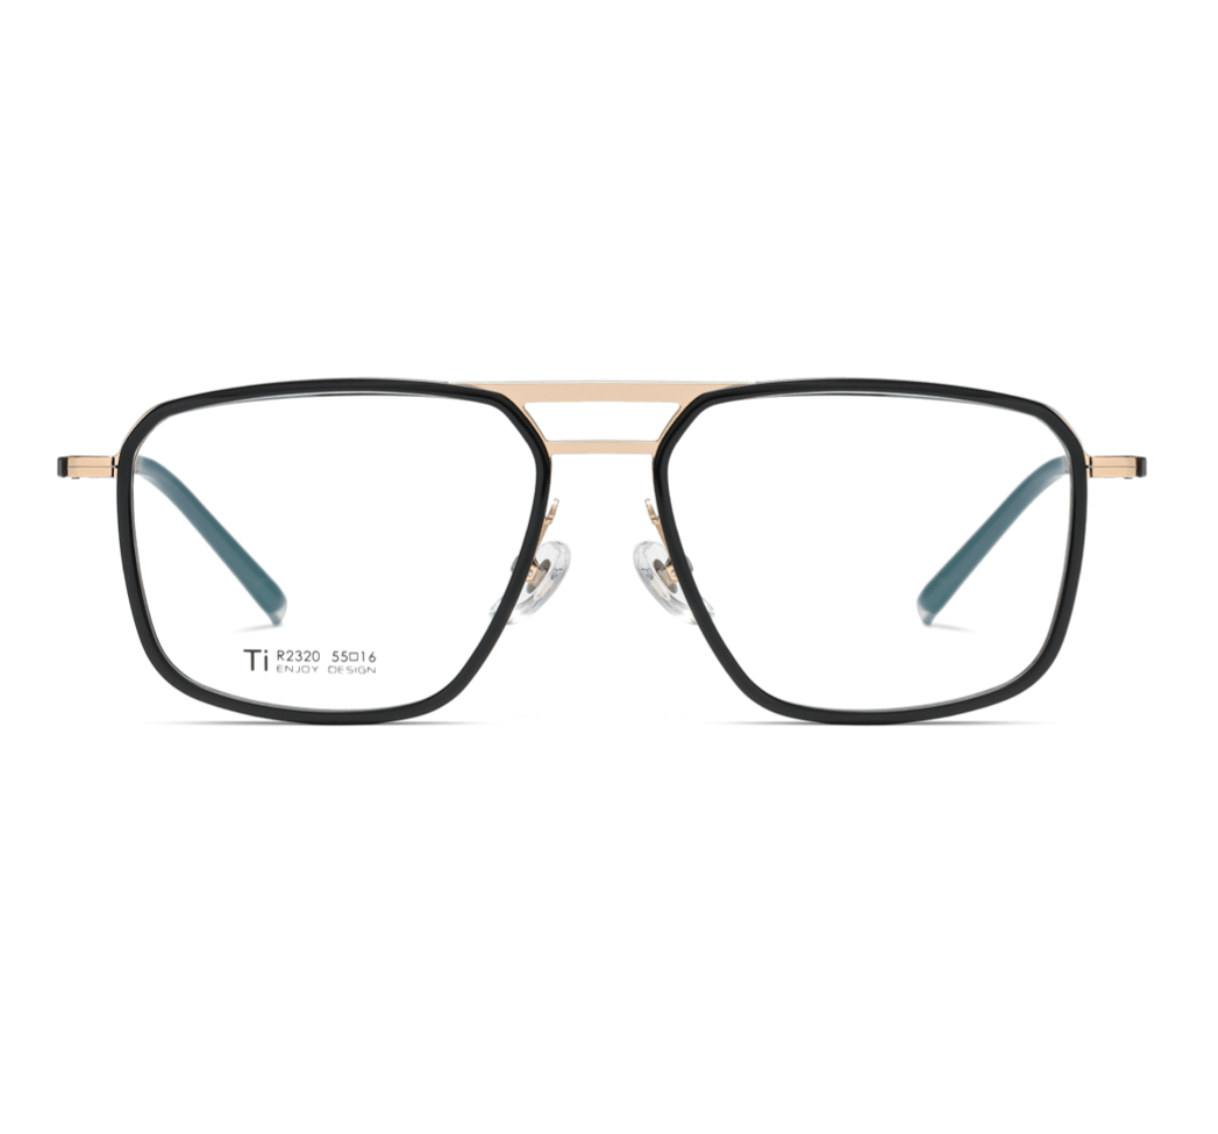 Fashion Glasses Frames, custom made eyewear frames, optical frame manufacturers in China, eyewear supplier